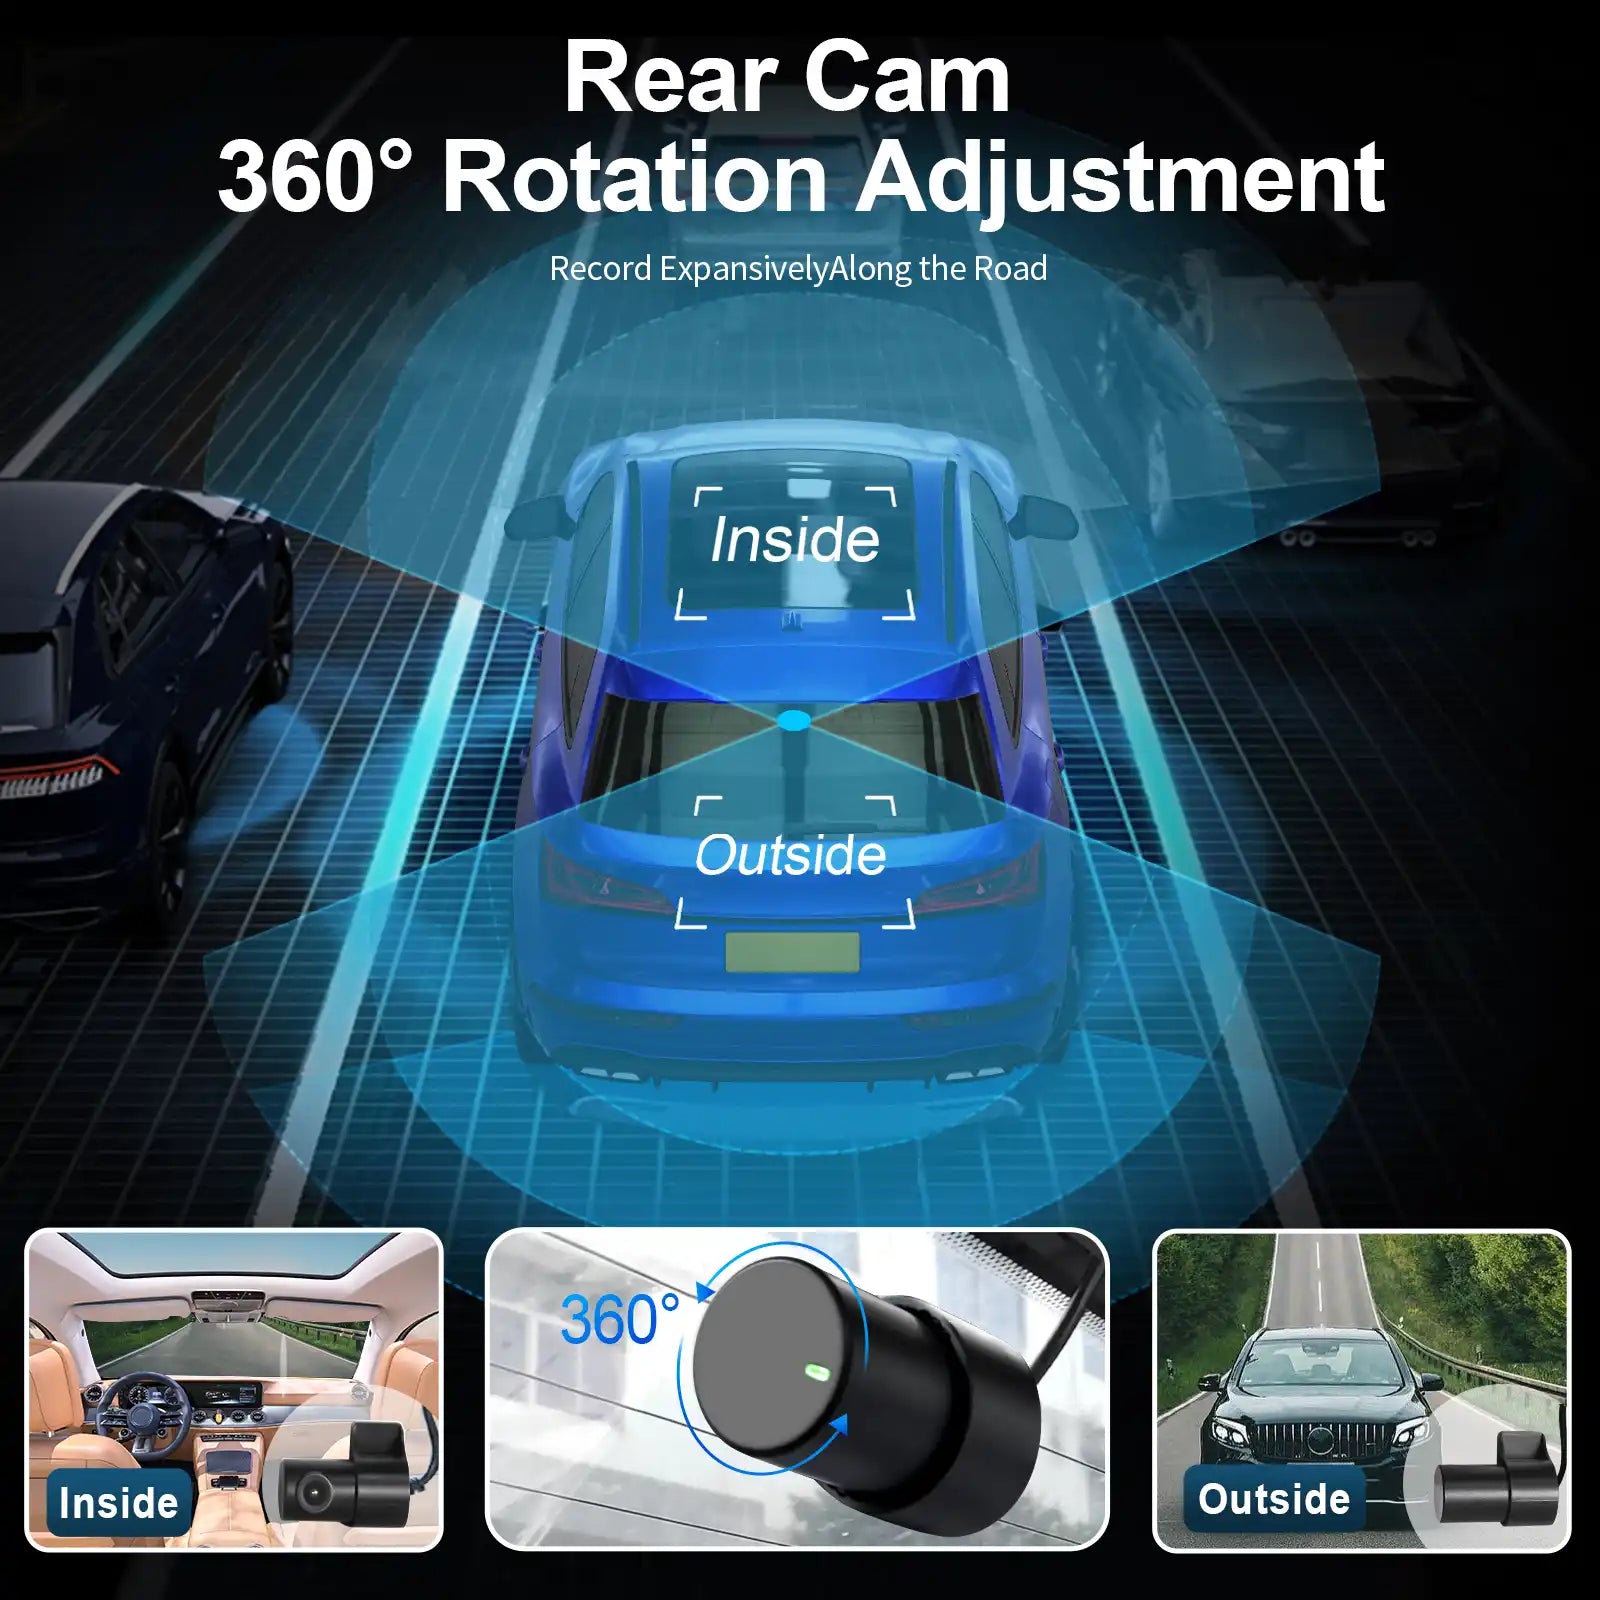 Honda Civic 360 reat cam rotation adjustment  